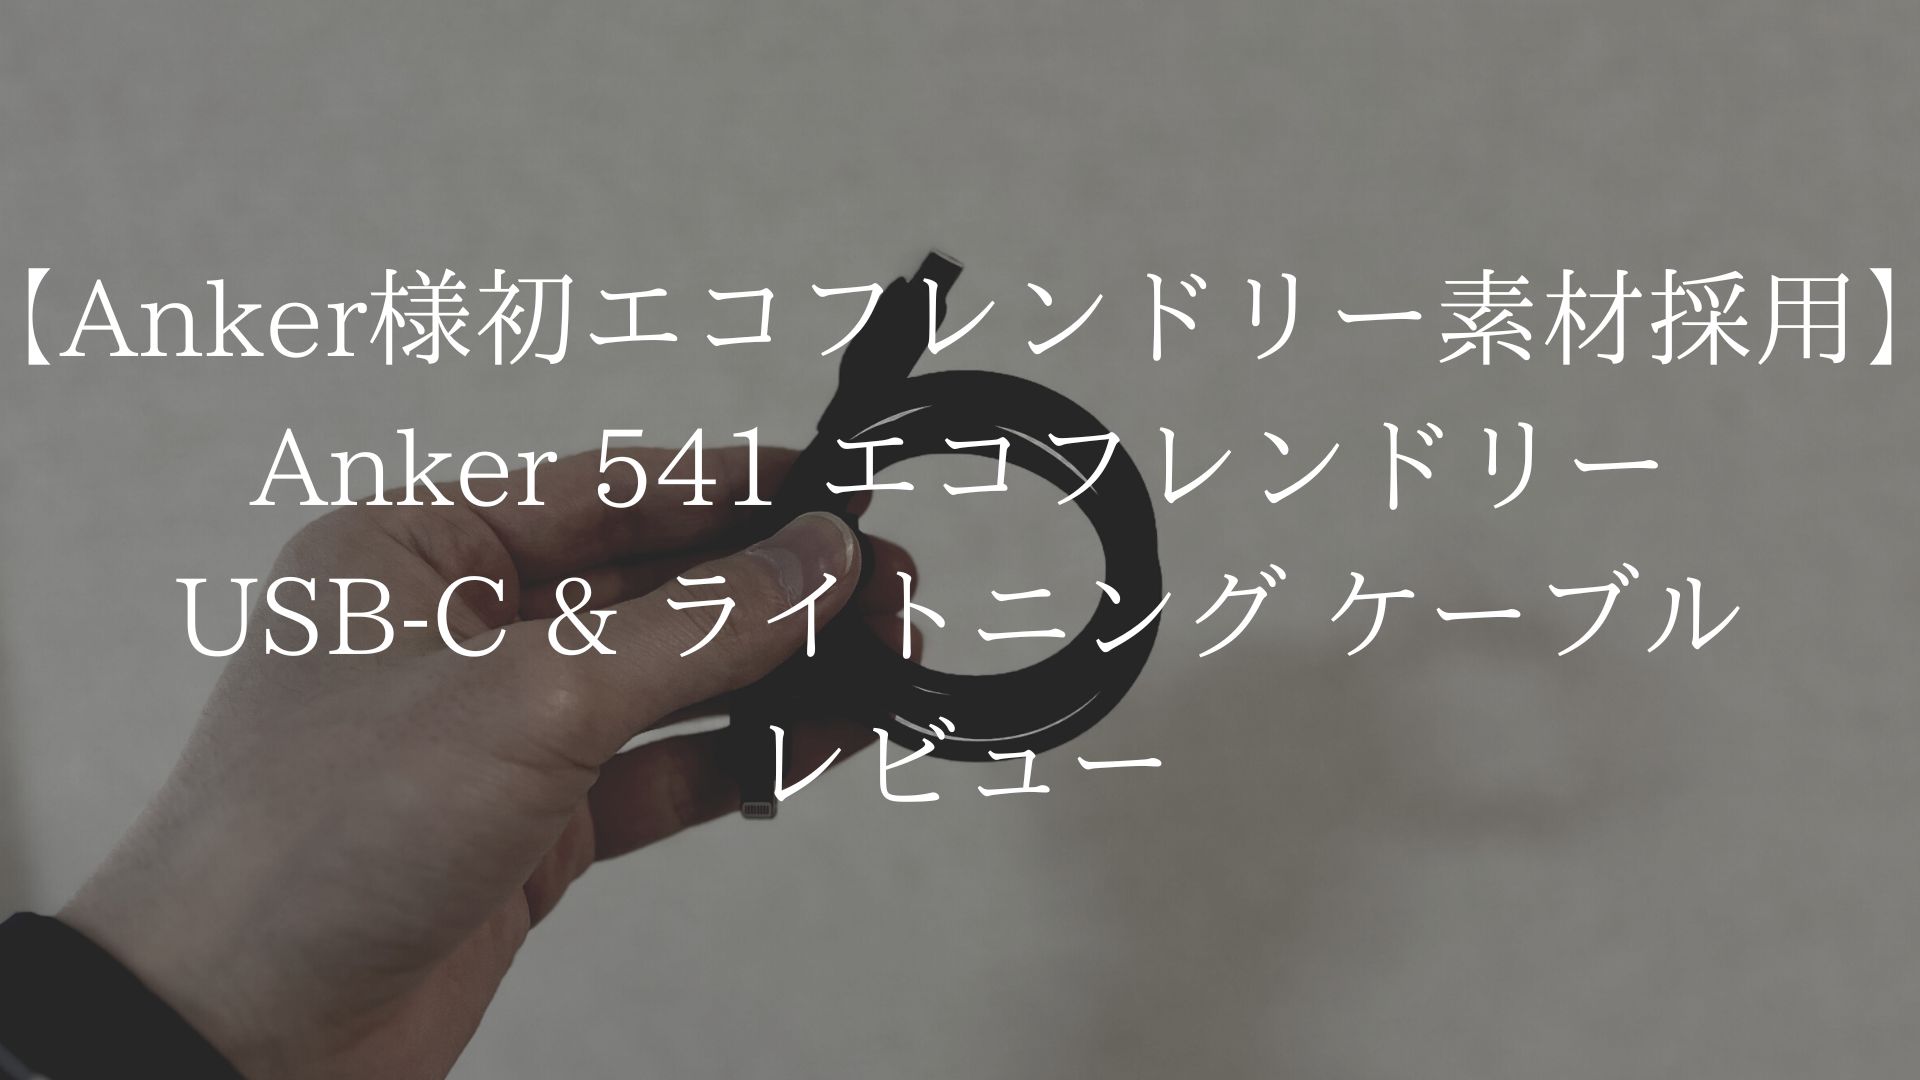 Anker 541 エコフレンドリー USB-C & ライトニング ケーブルのアイキャッチ画像